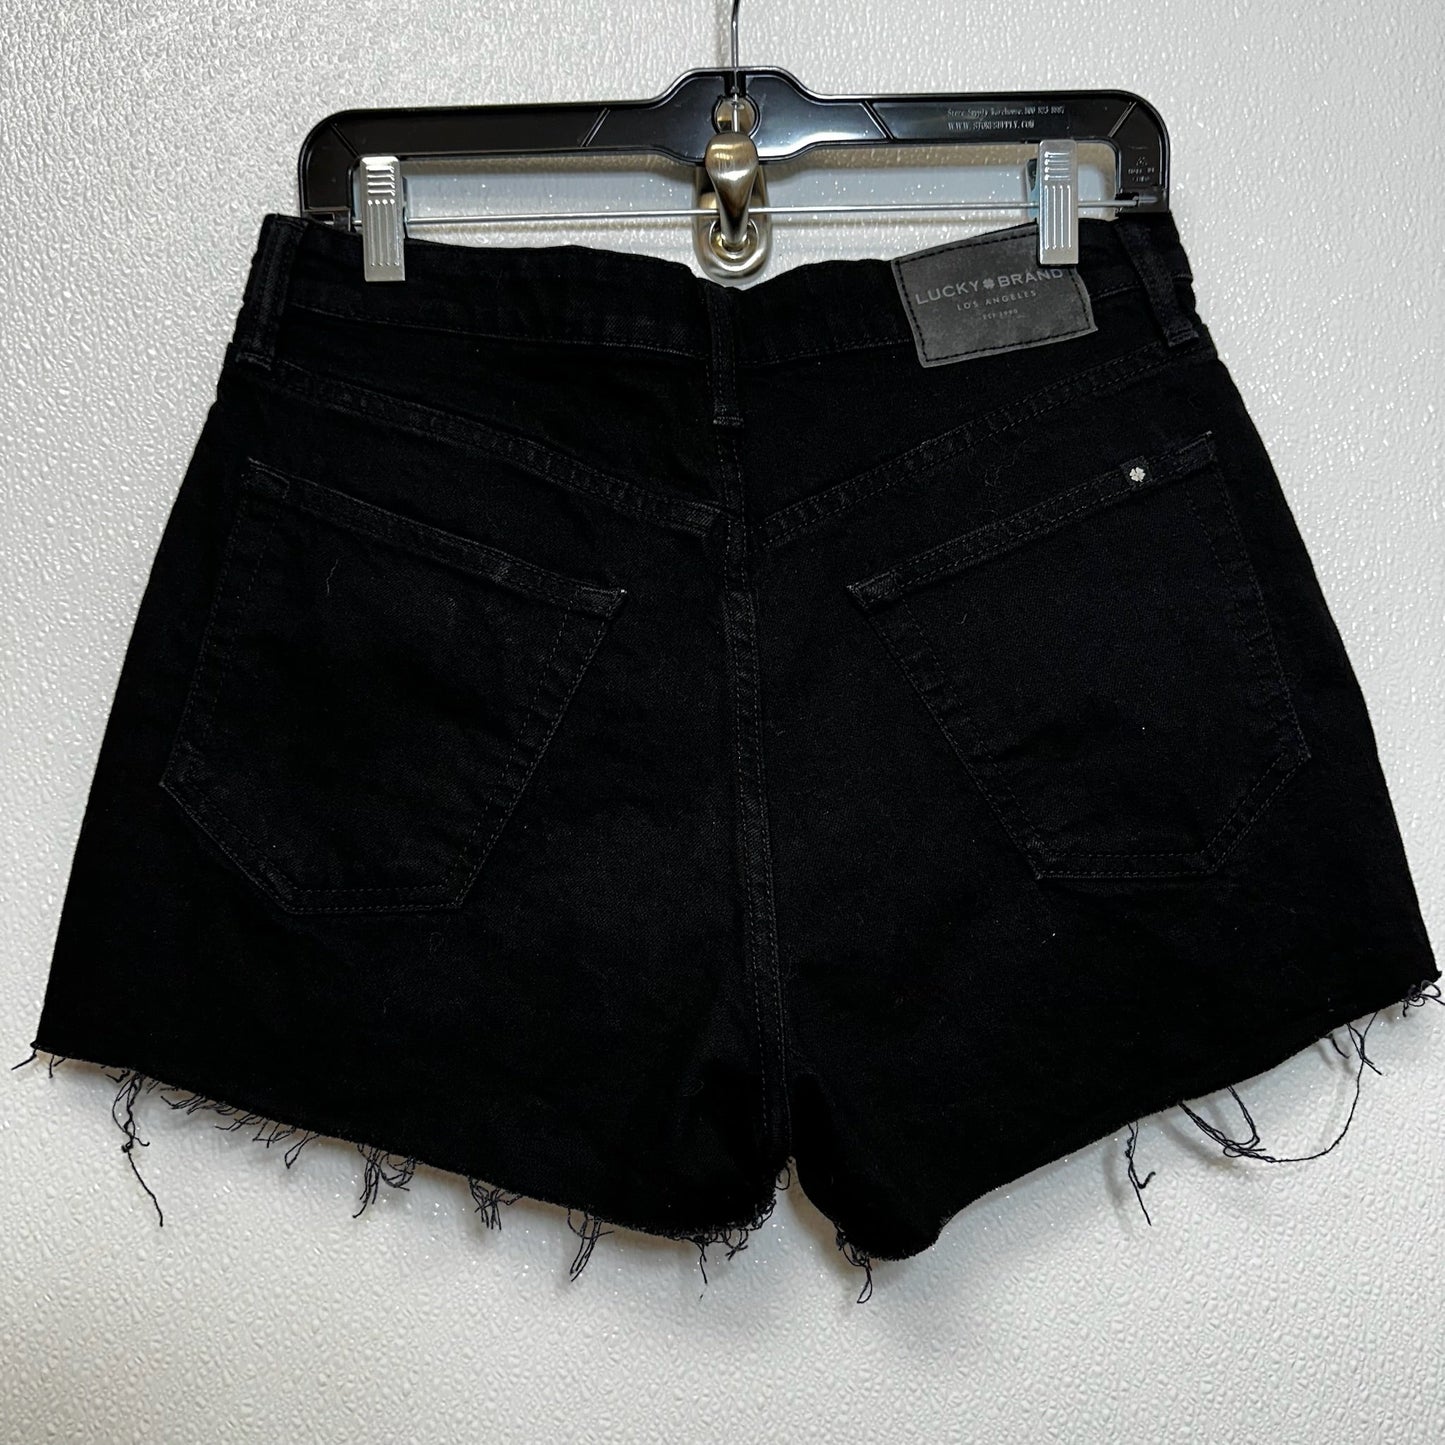 Black Shorts Lucky Brand, Size 8